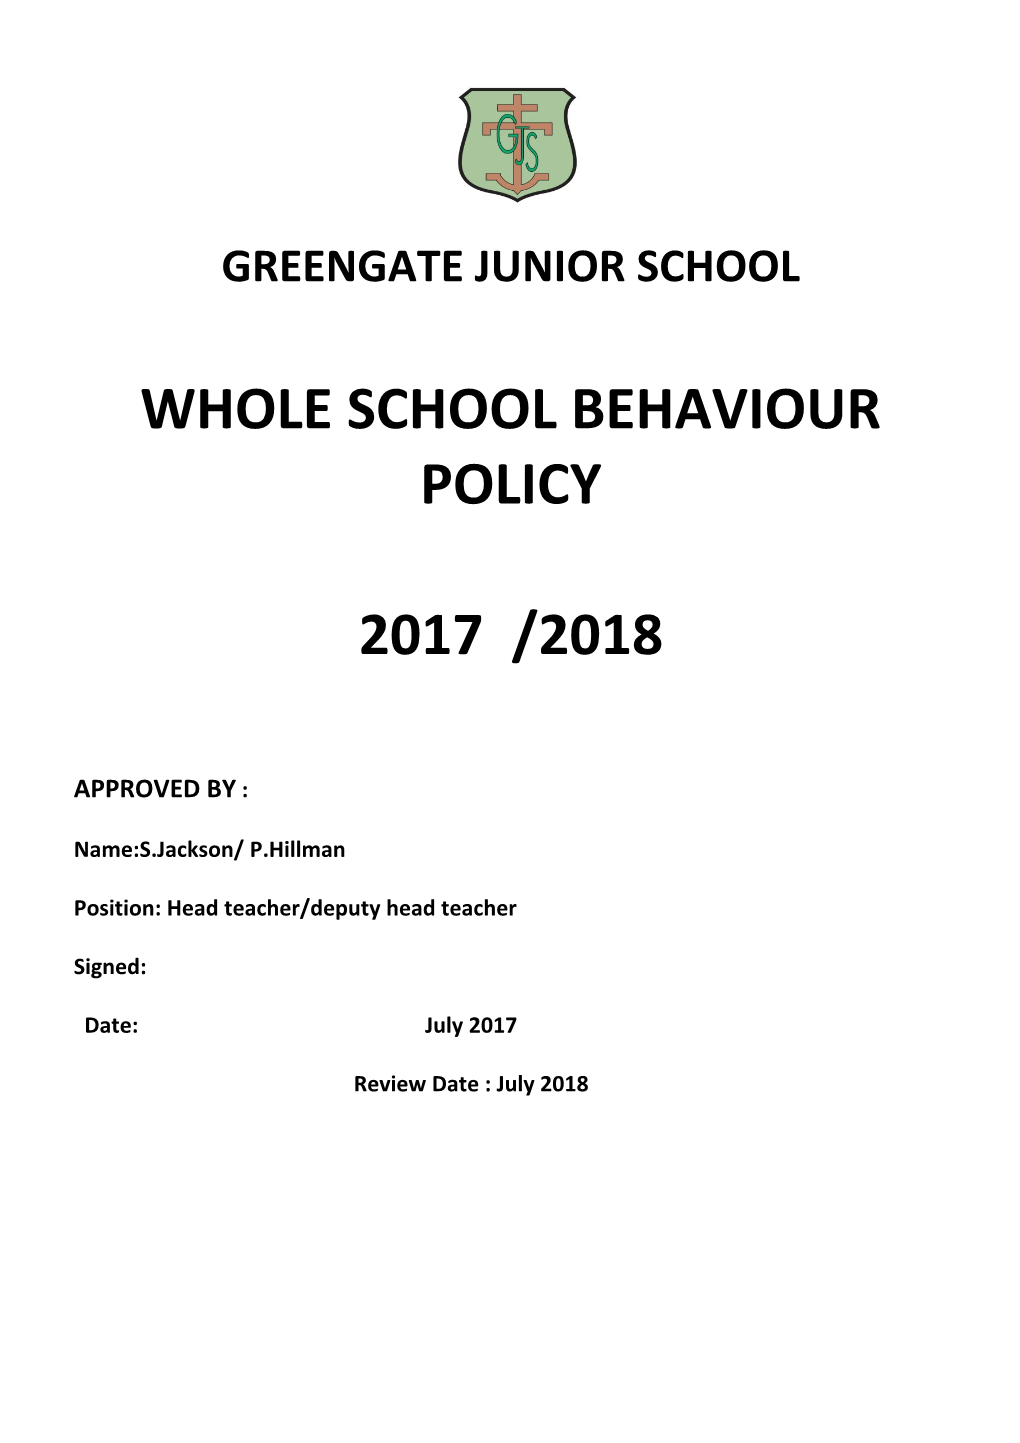 Whole School Behaviour Policy